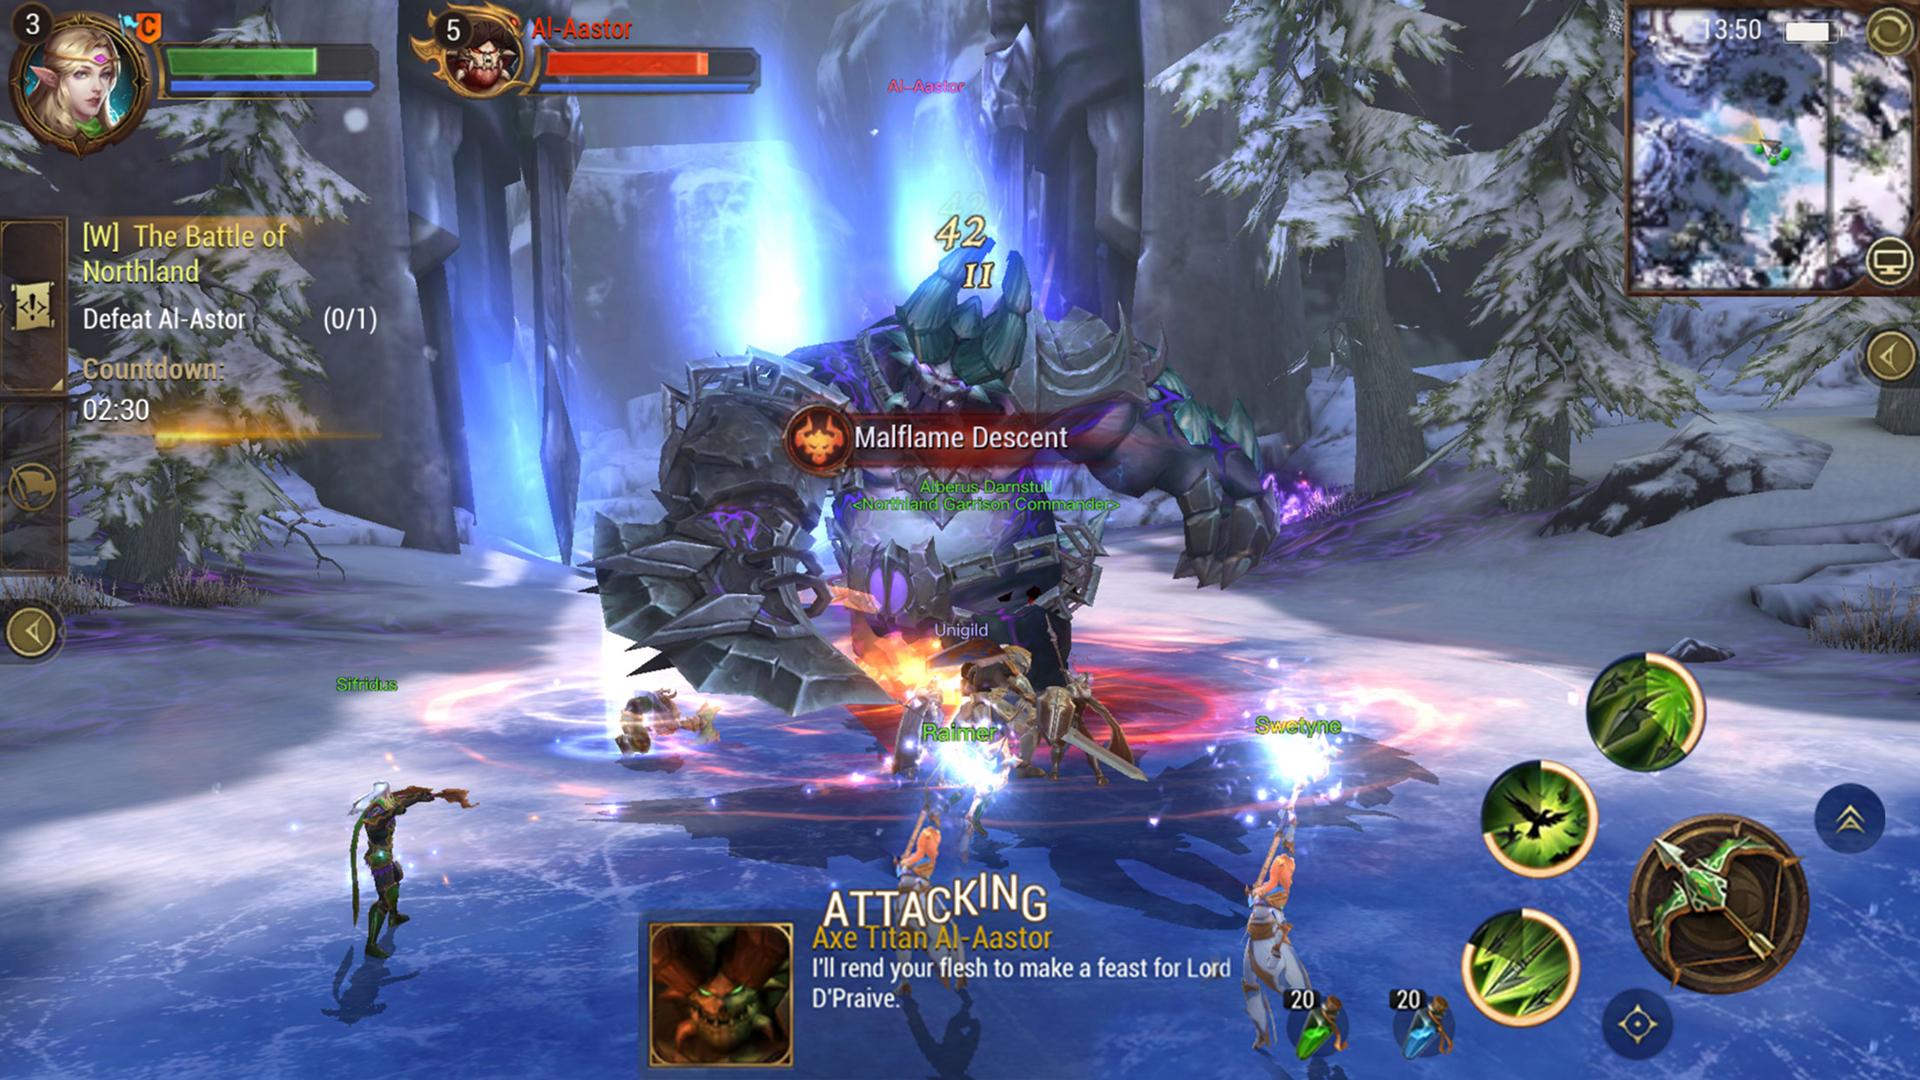 Screenshot №6 from game Crusaders of Light